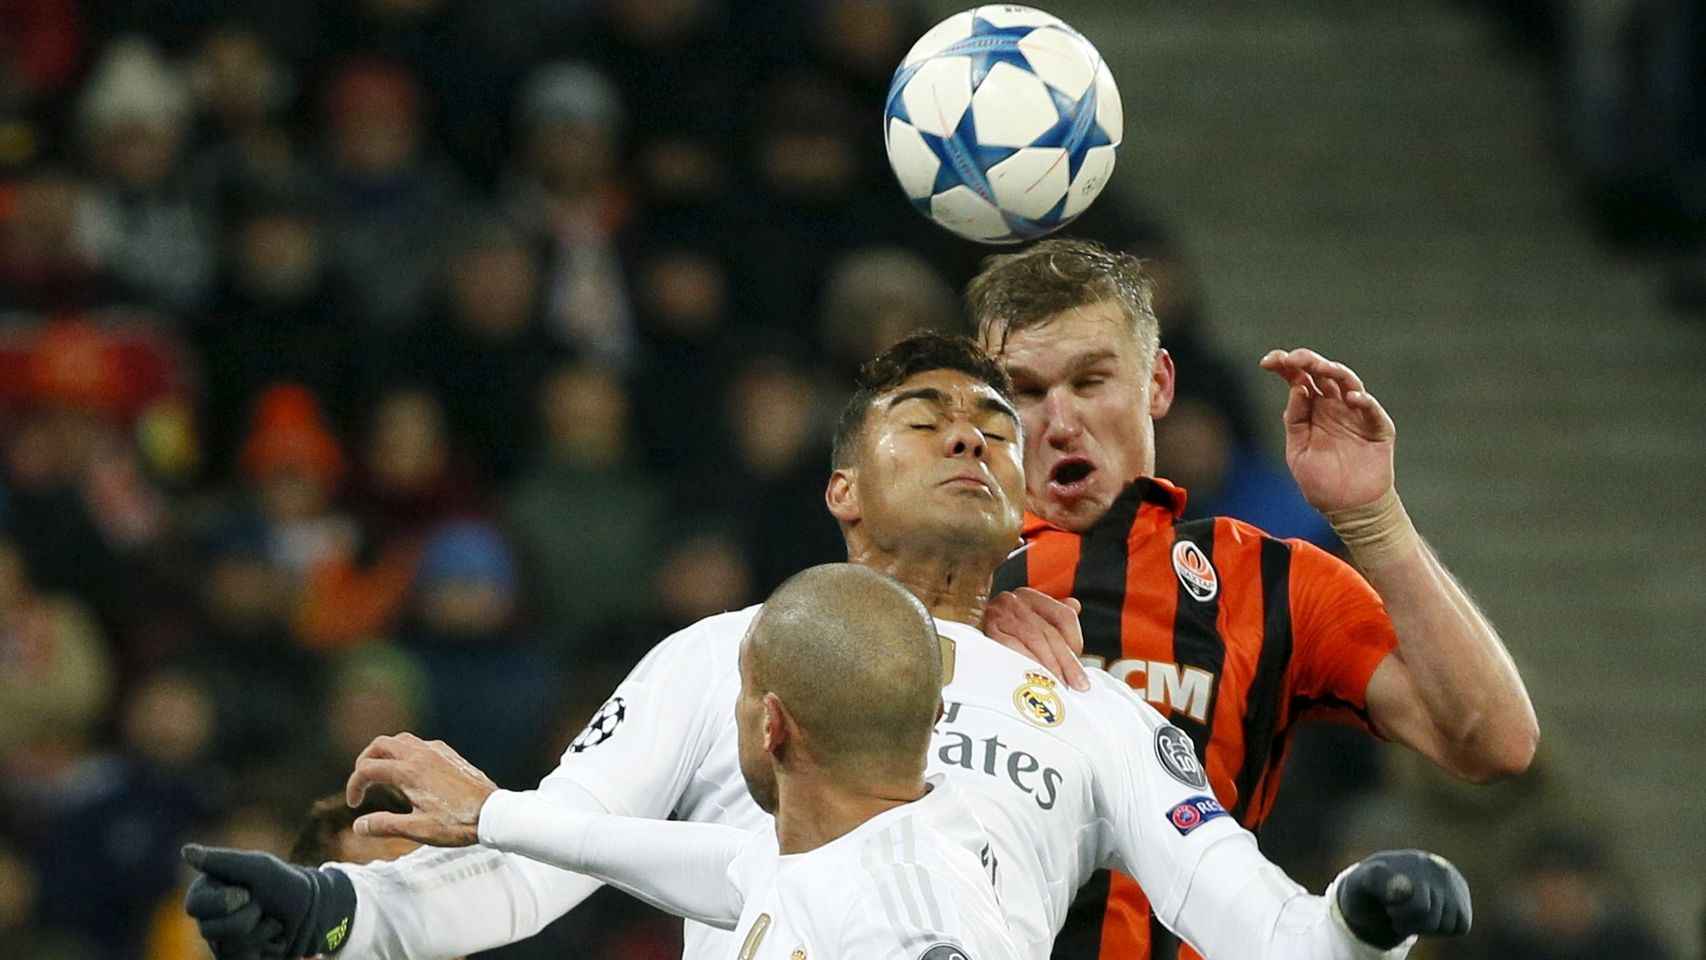 Casemiro disputa la pelota con Gladkiy durante el Shakhtar Donetsk-Real Madrid.